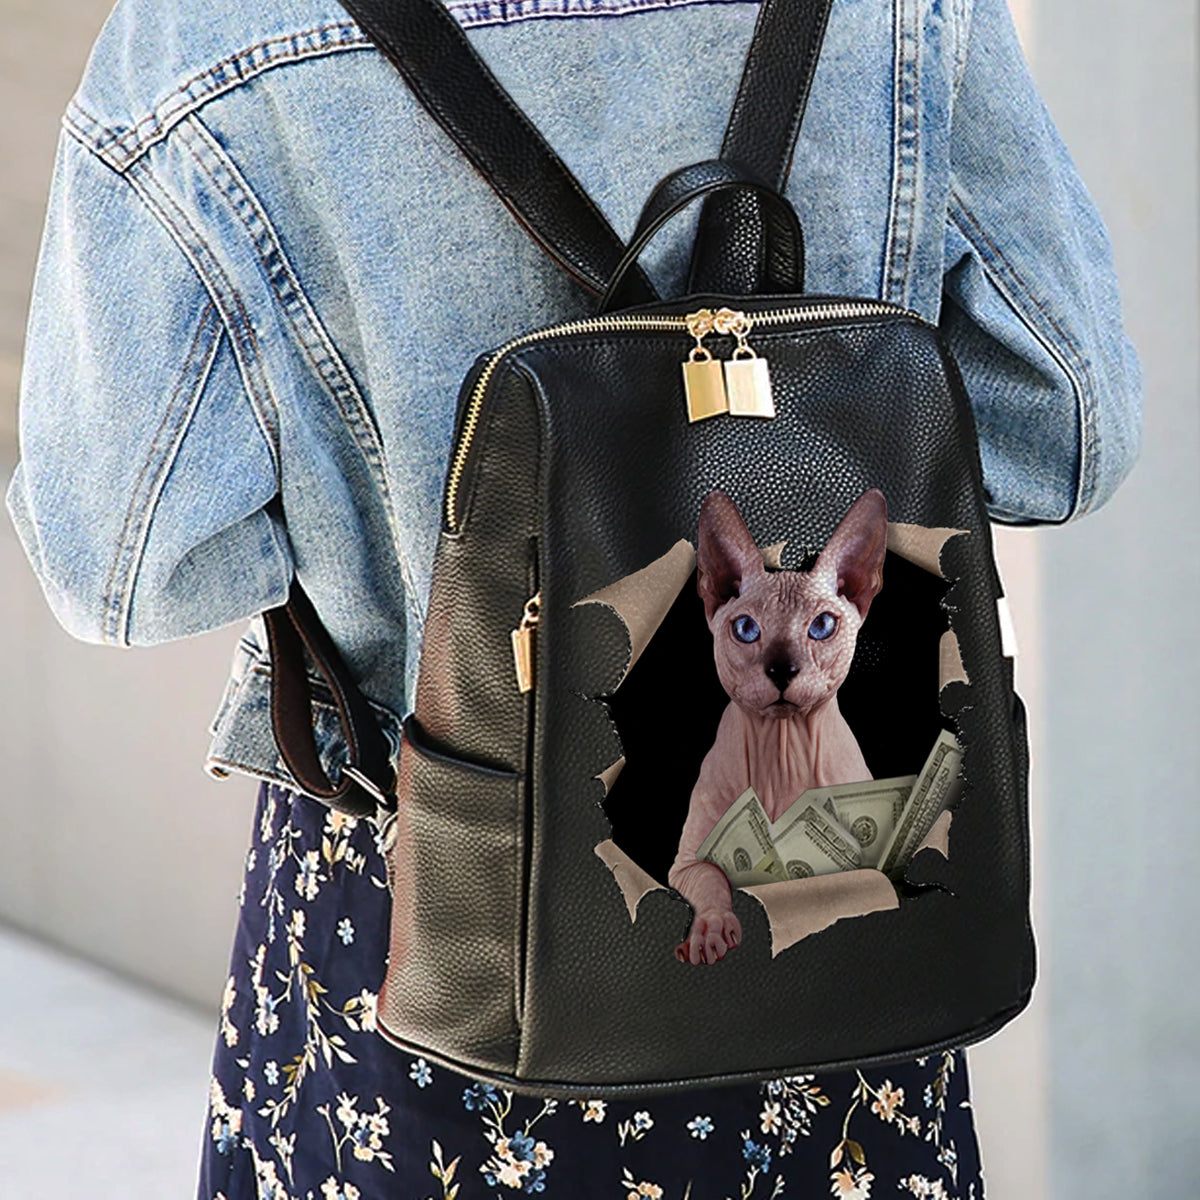 It's All Mine - Sphynx Cat Backpack V1